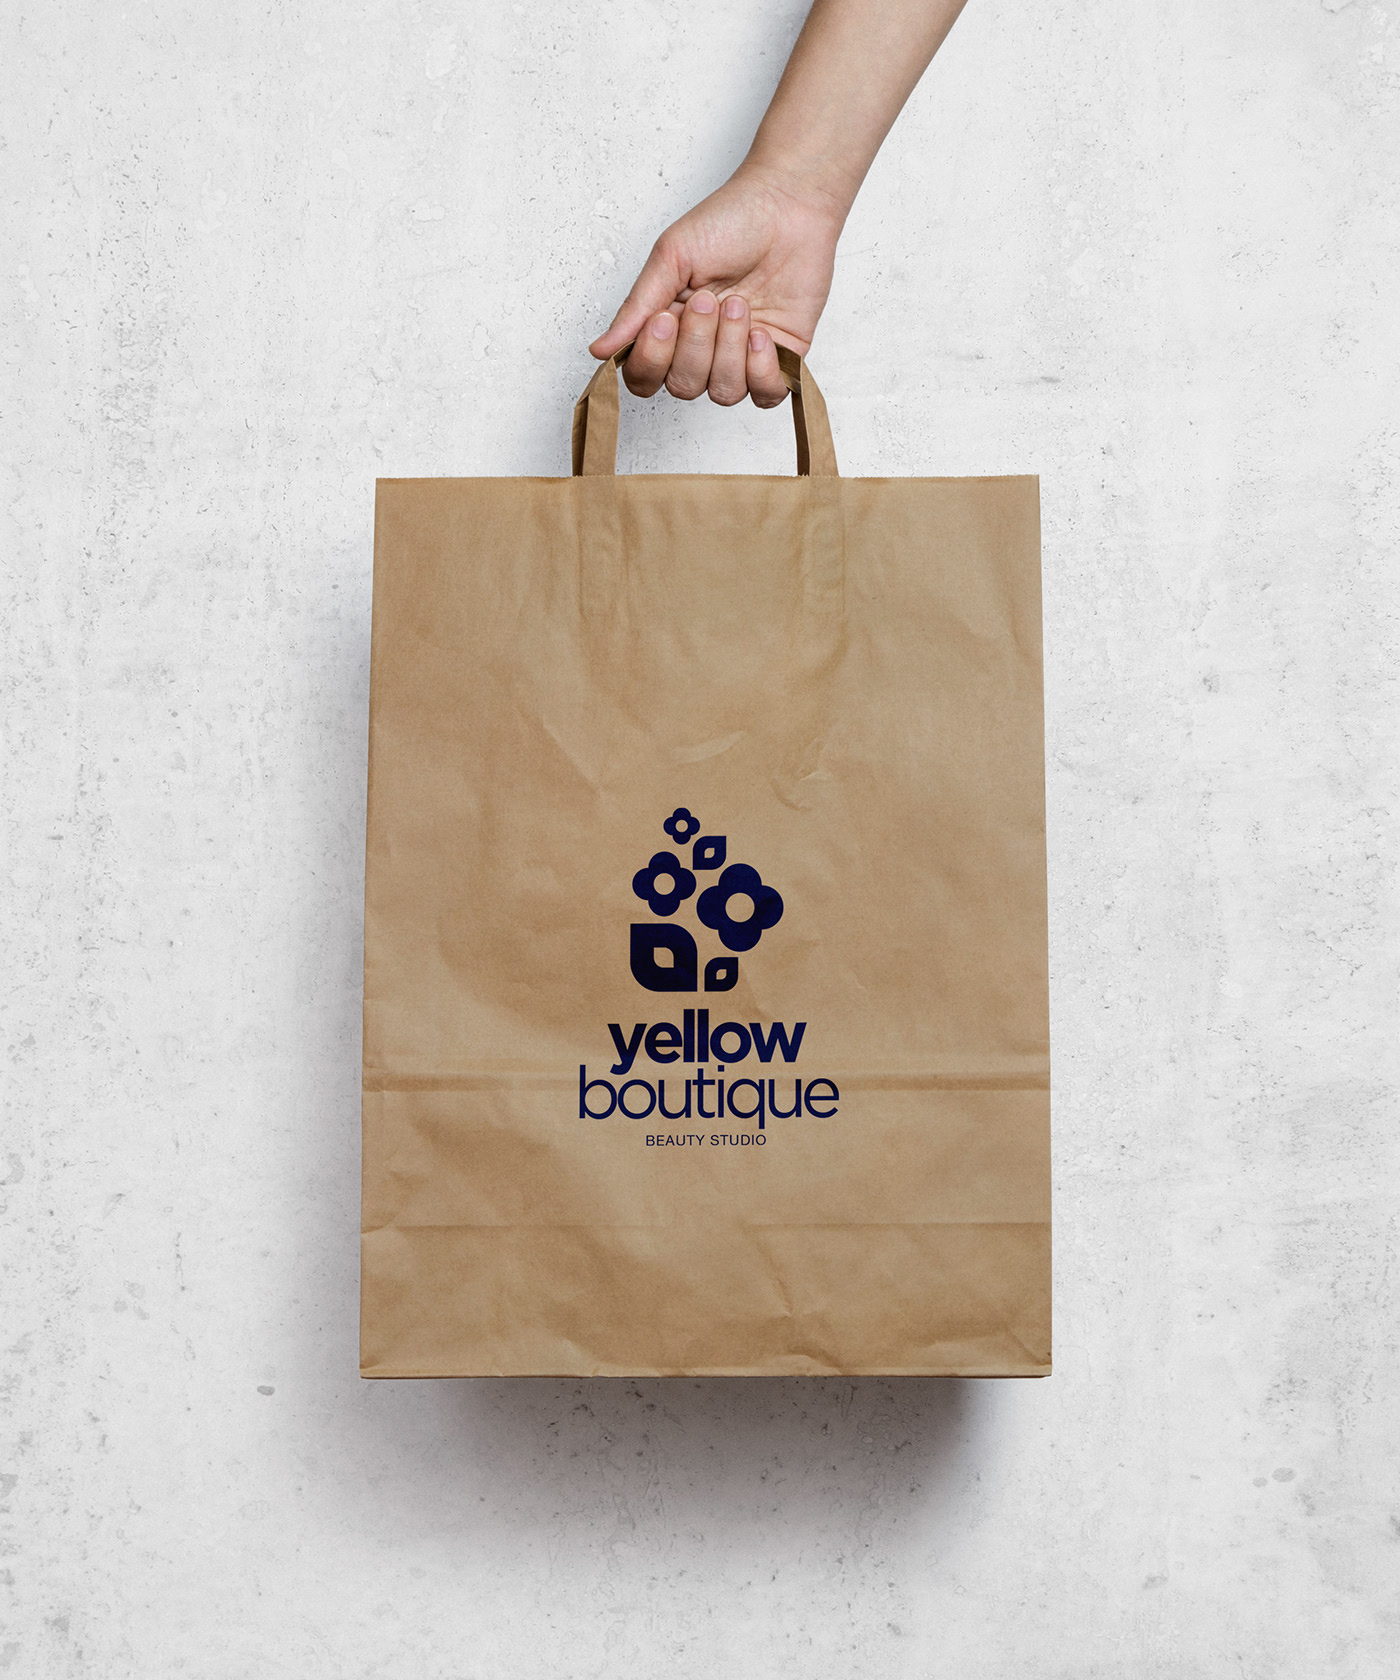 Yellow Boutique Corporate Identity